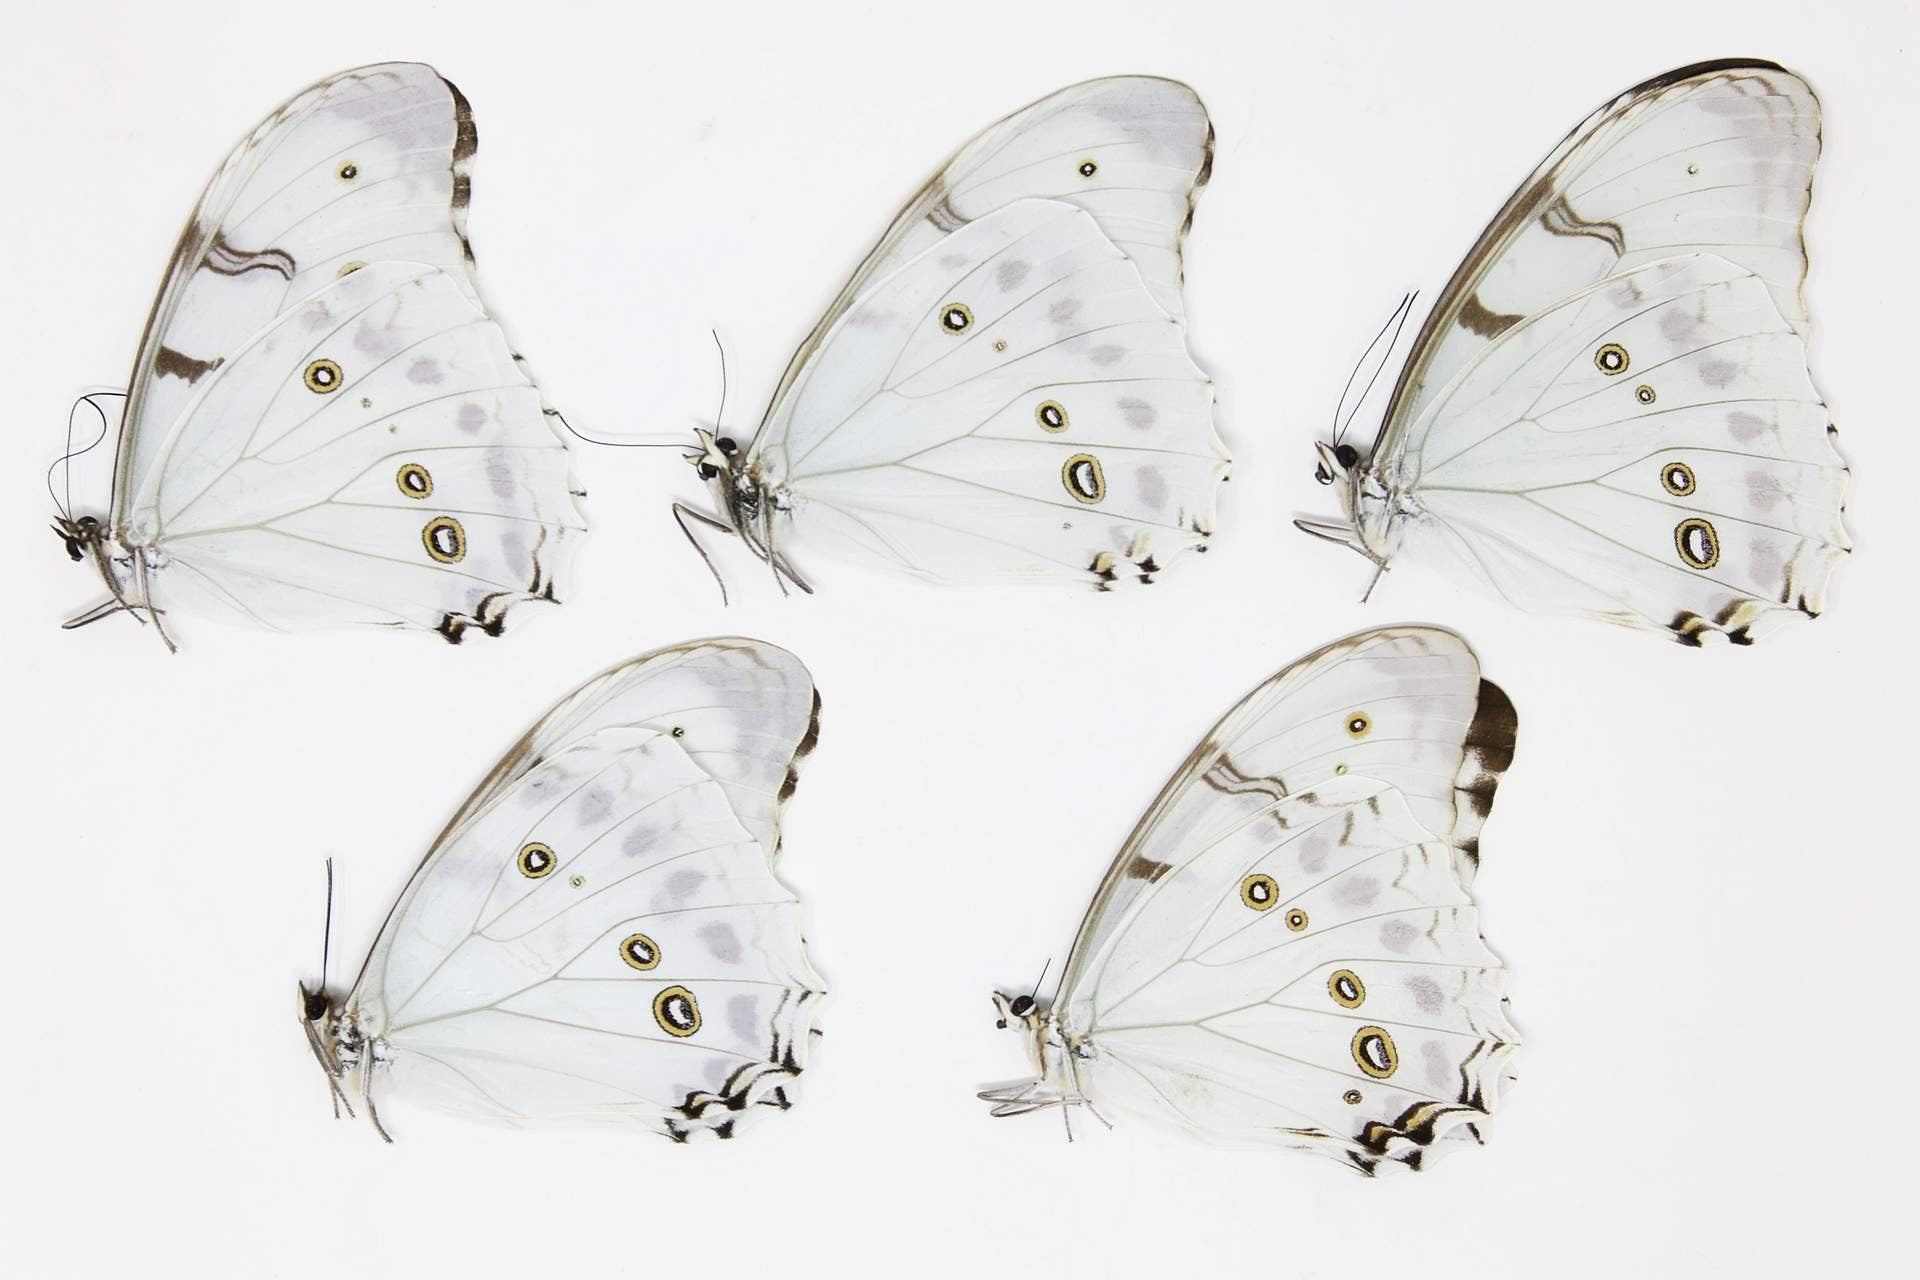 FIVE (5) Morpho polyphemus luna | White Morpho Butterflies | A1 Dry-Preserved Specimens